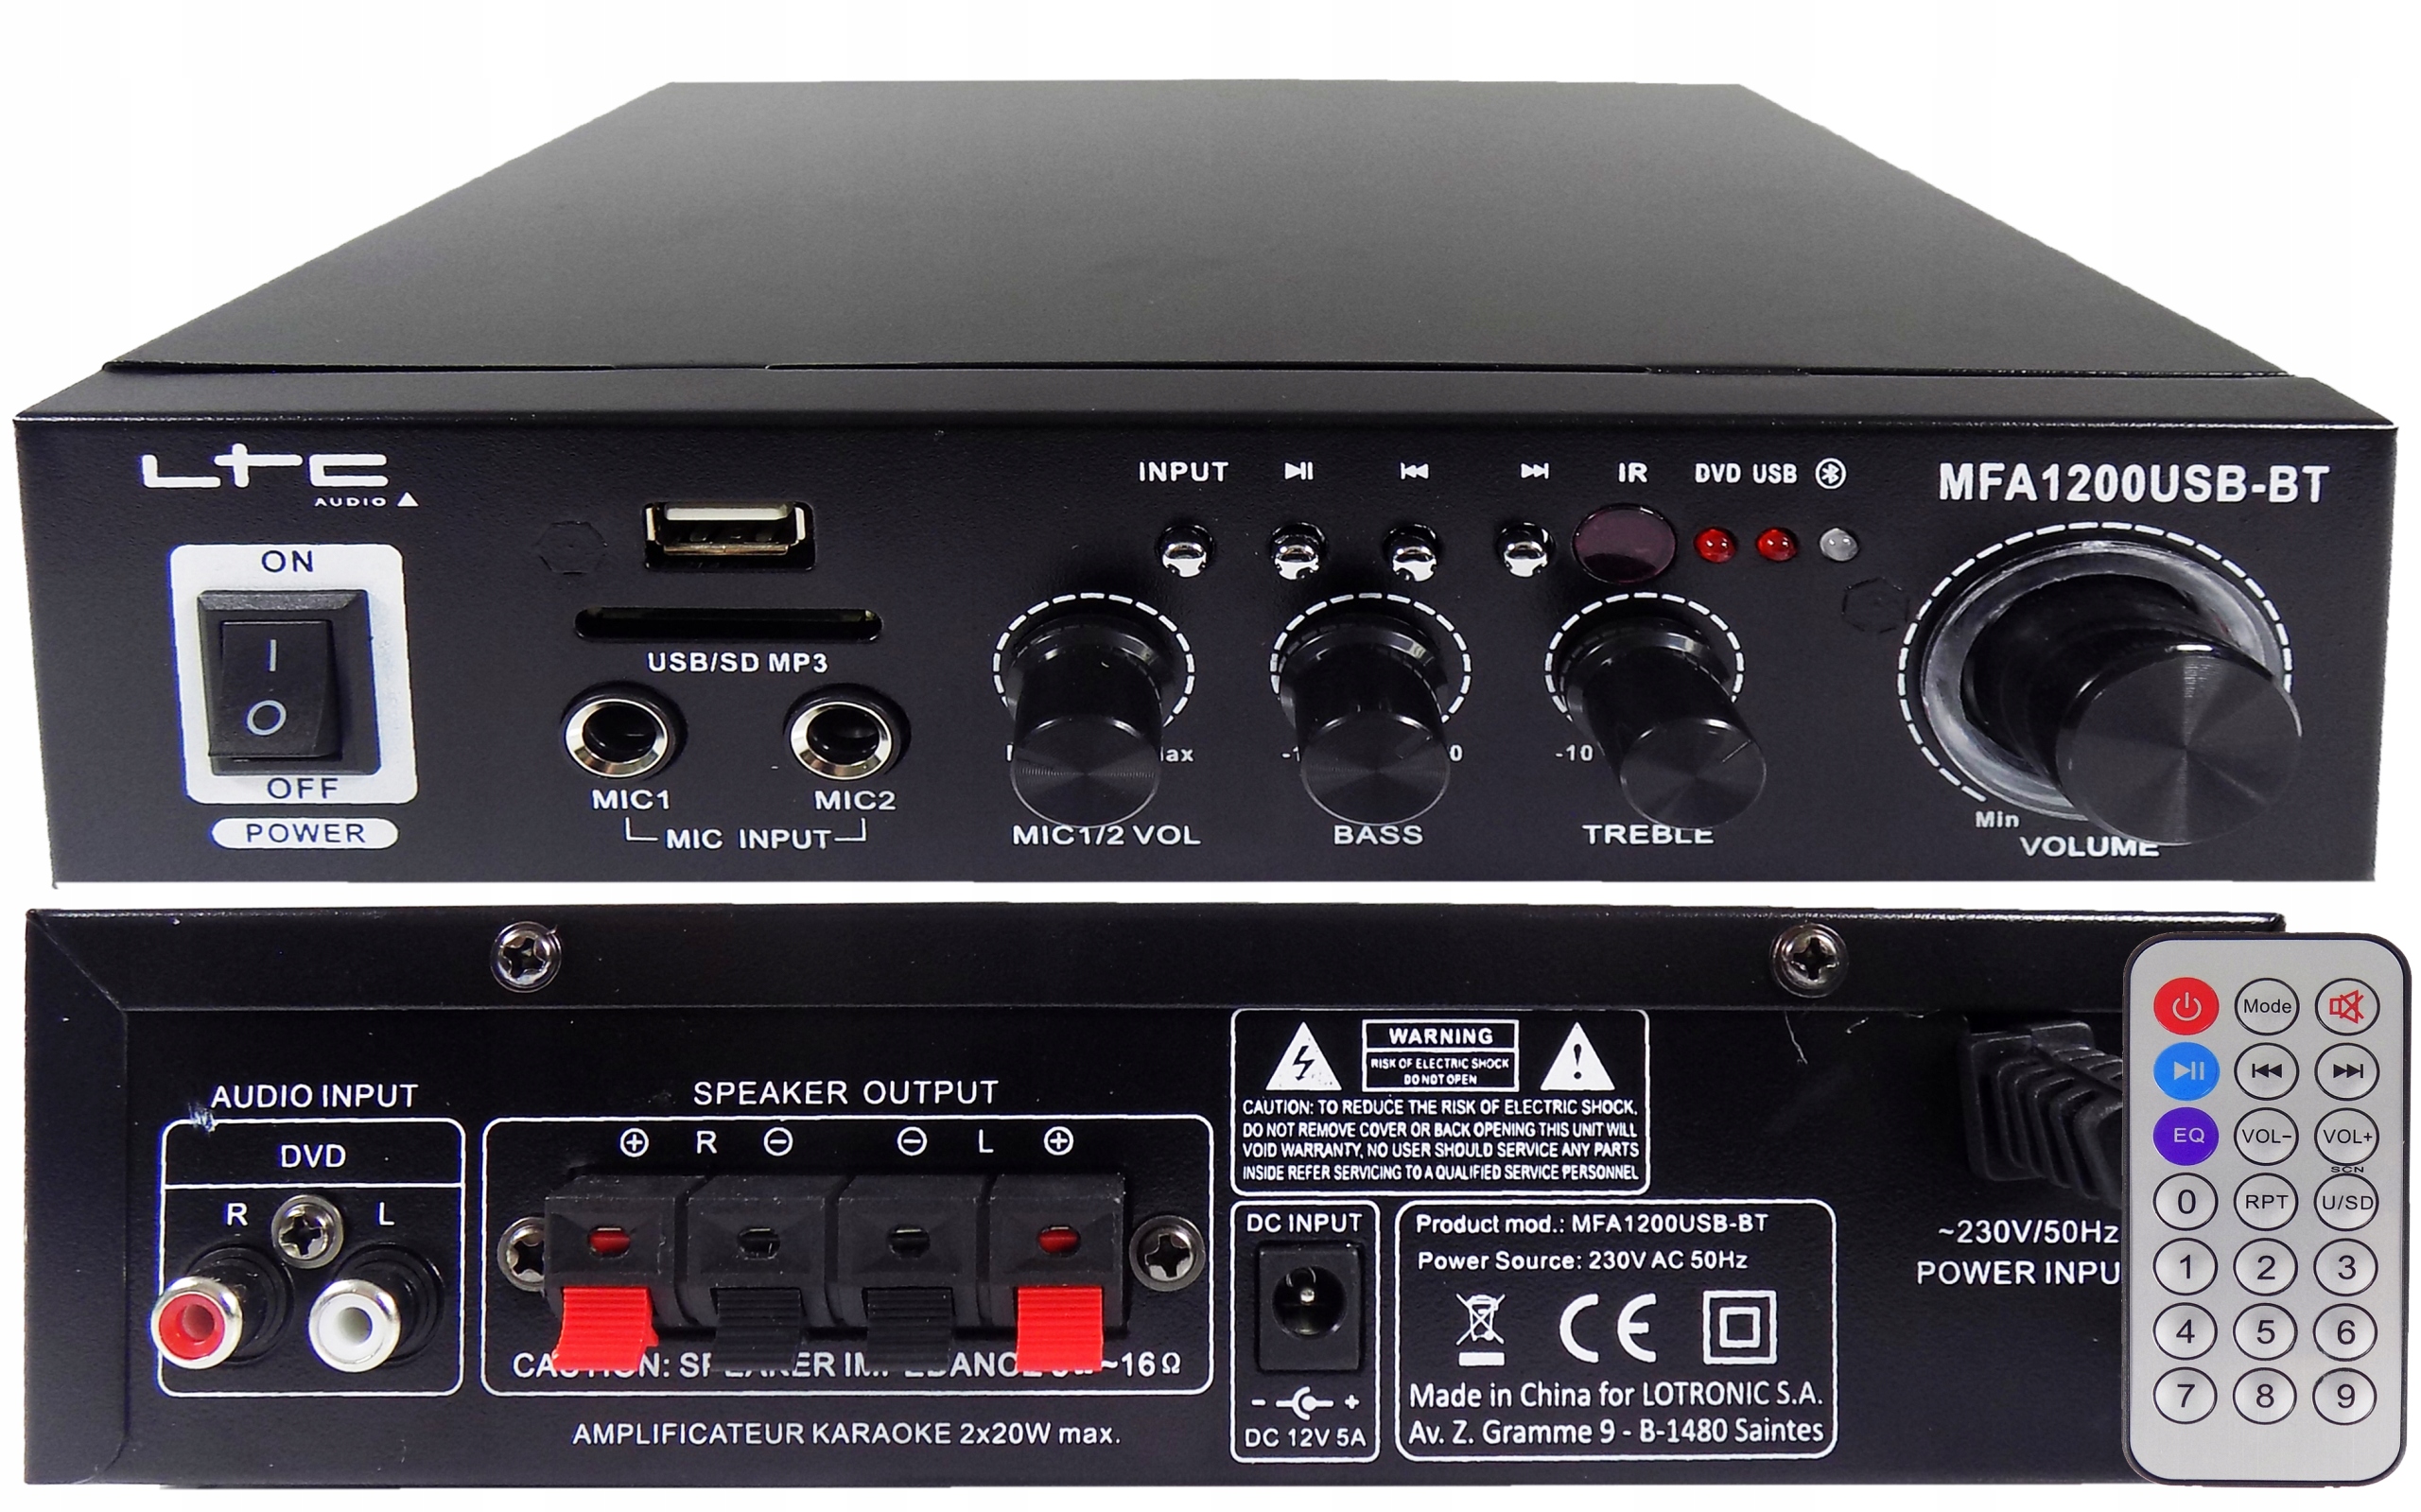 Amplificateur karaoké 100W MFA 1200 USB 